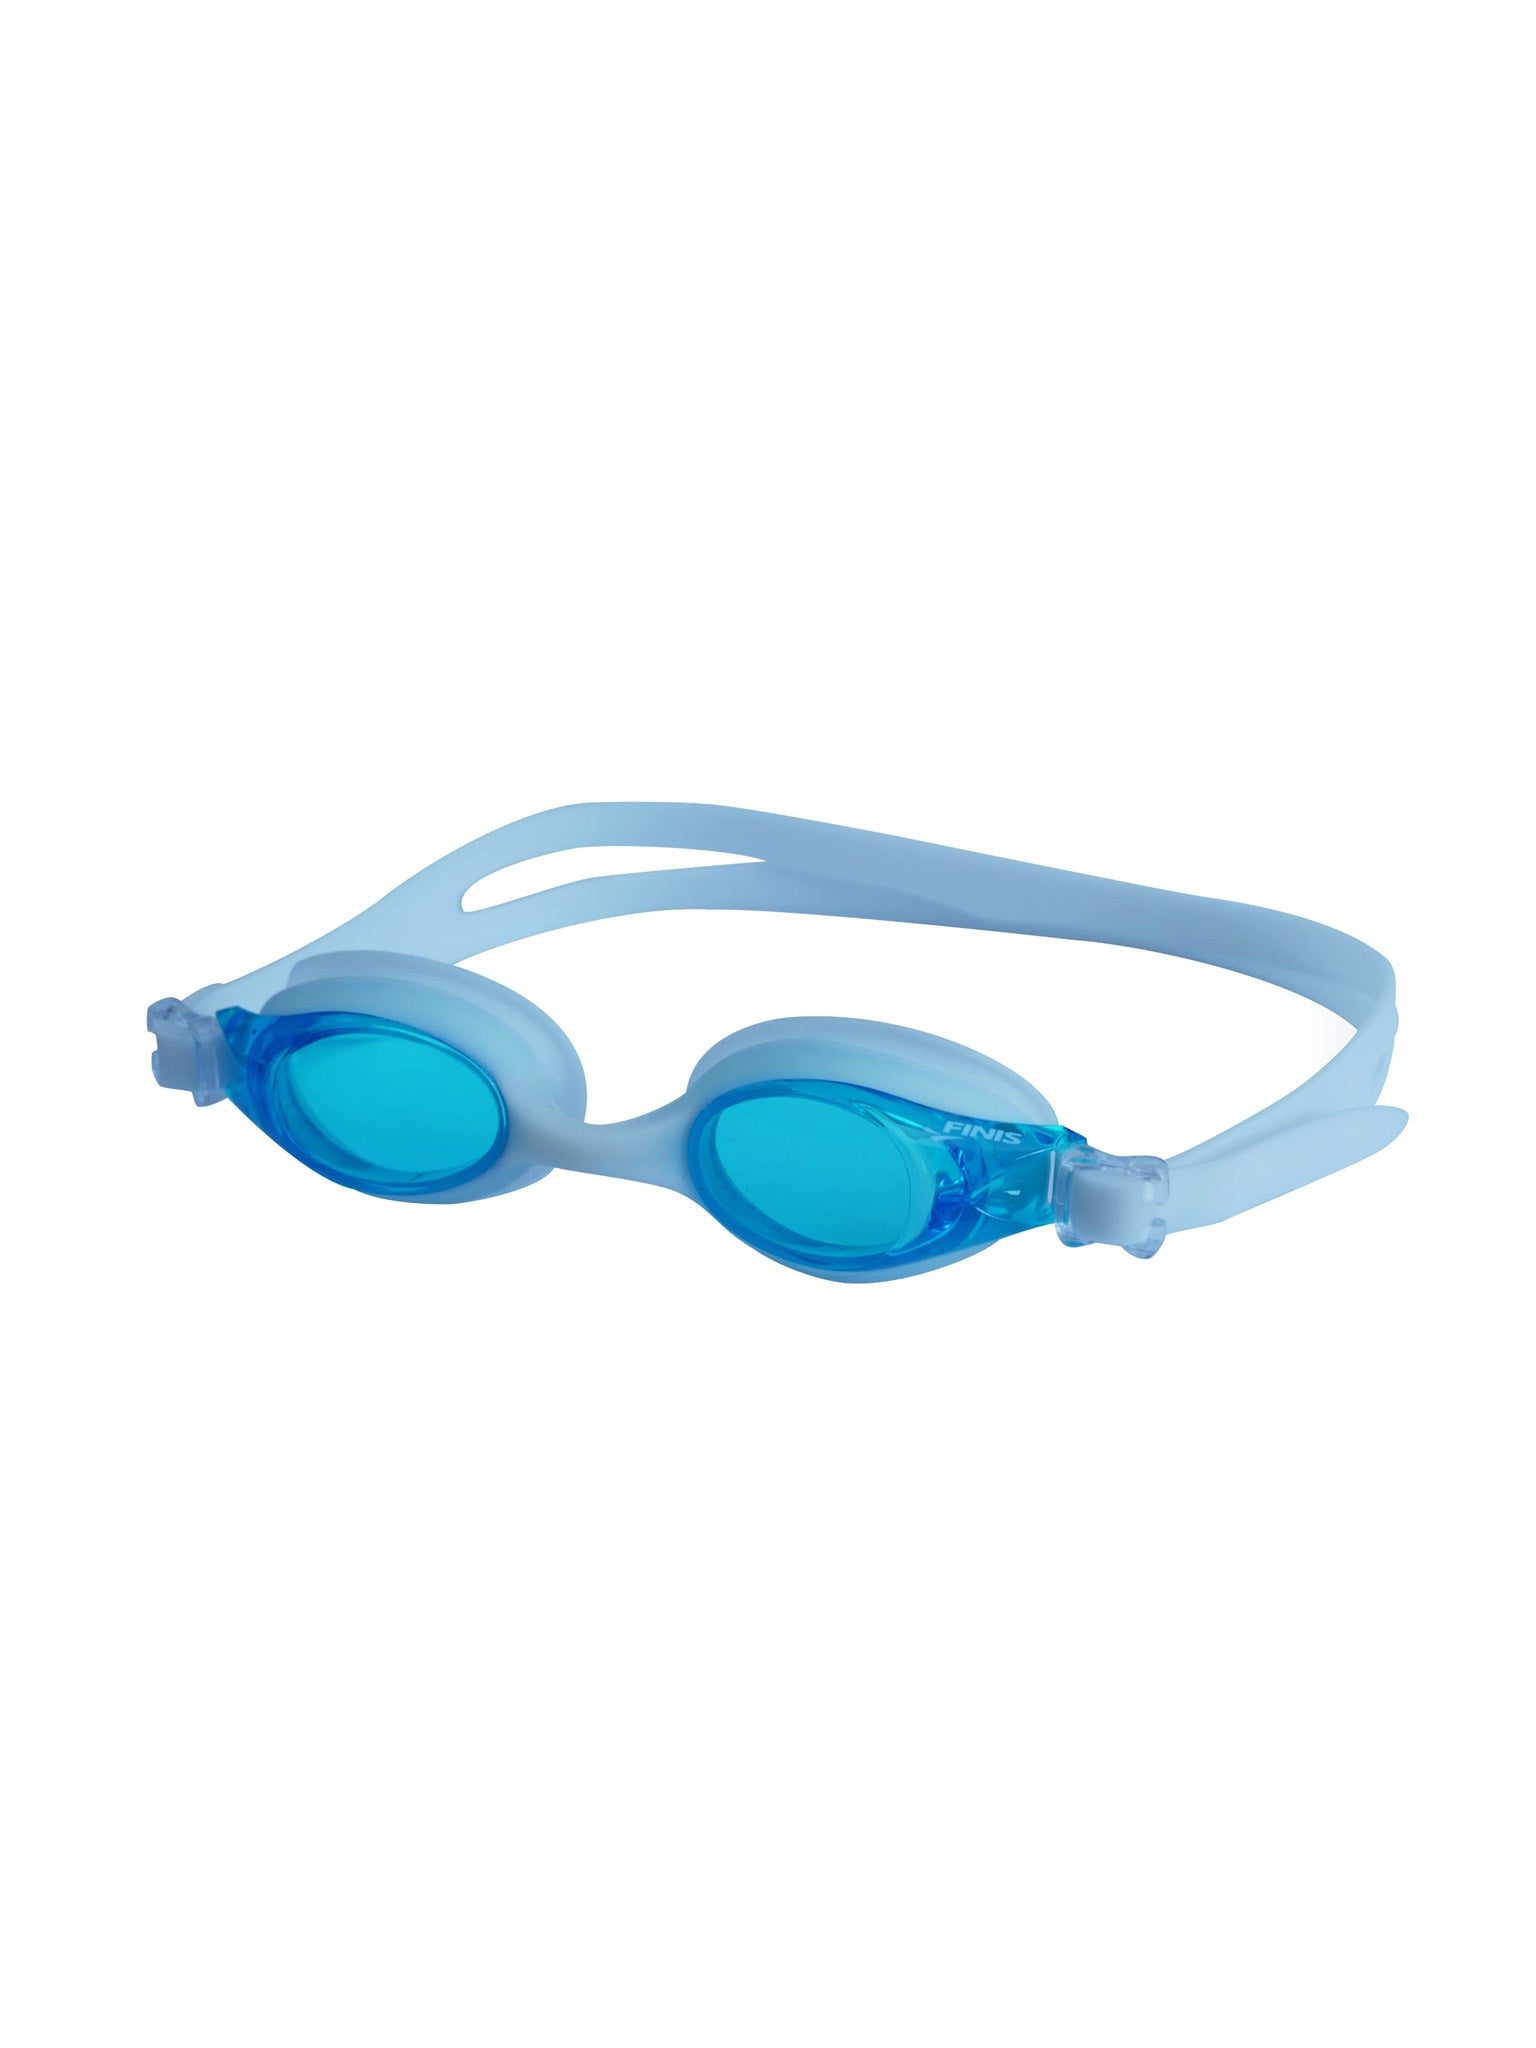 Swim goggles for kids Flowglows - Blue